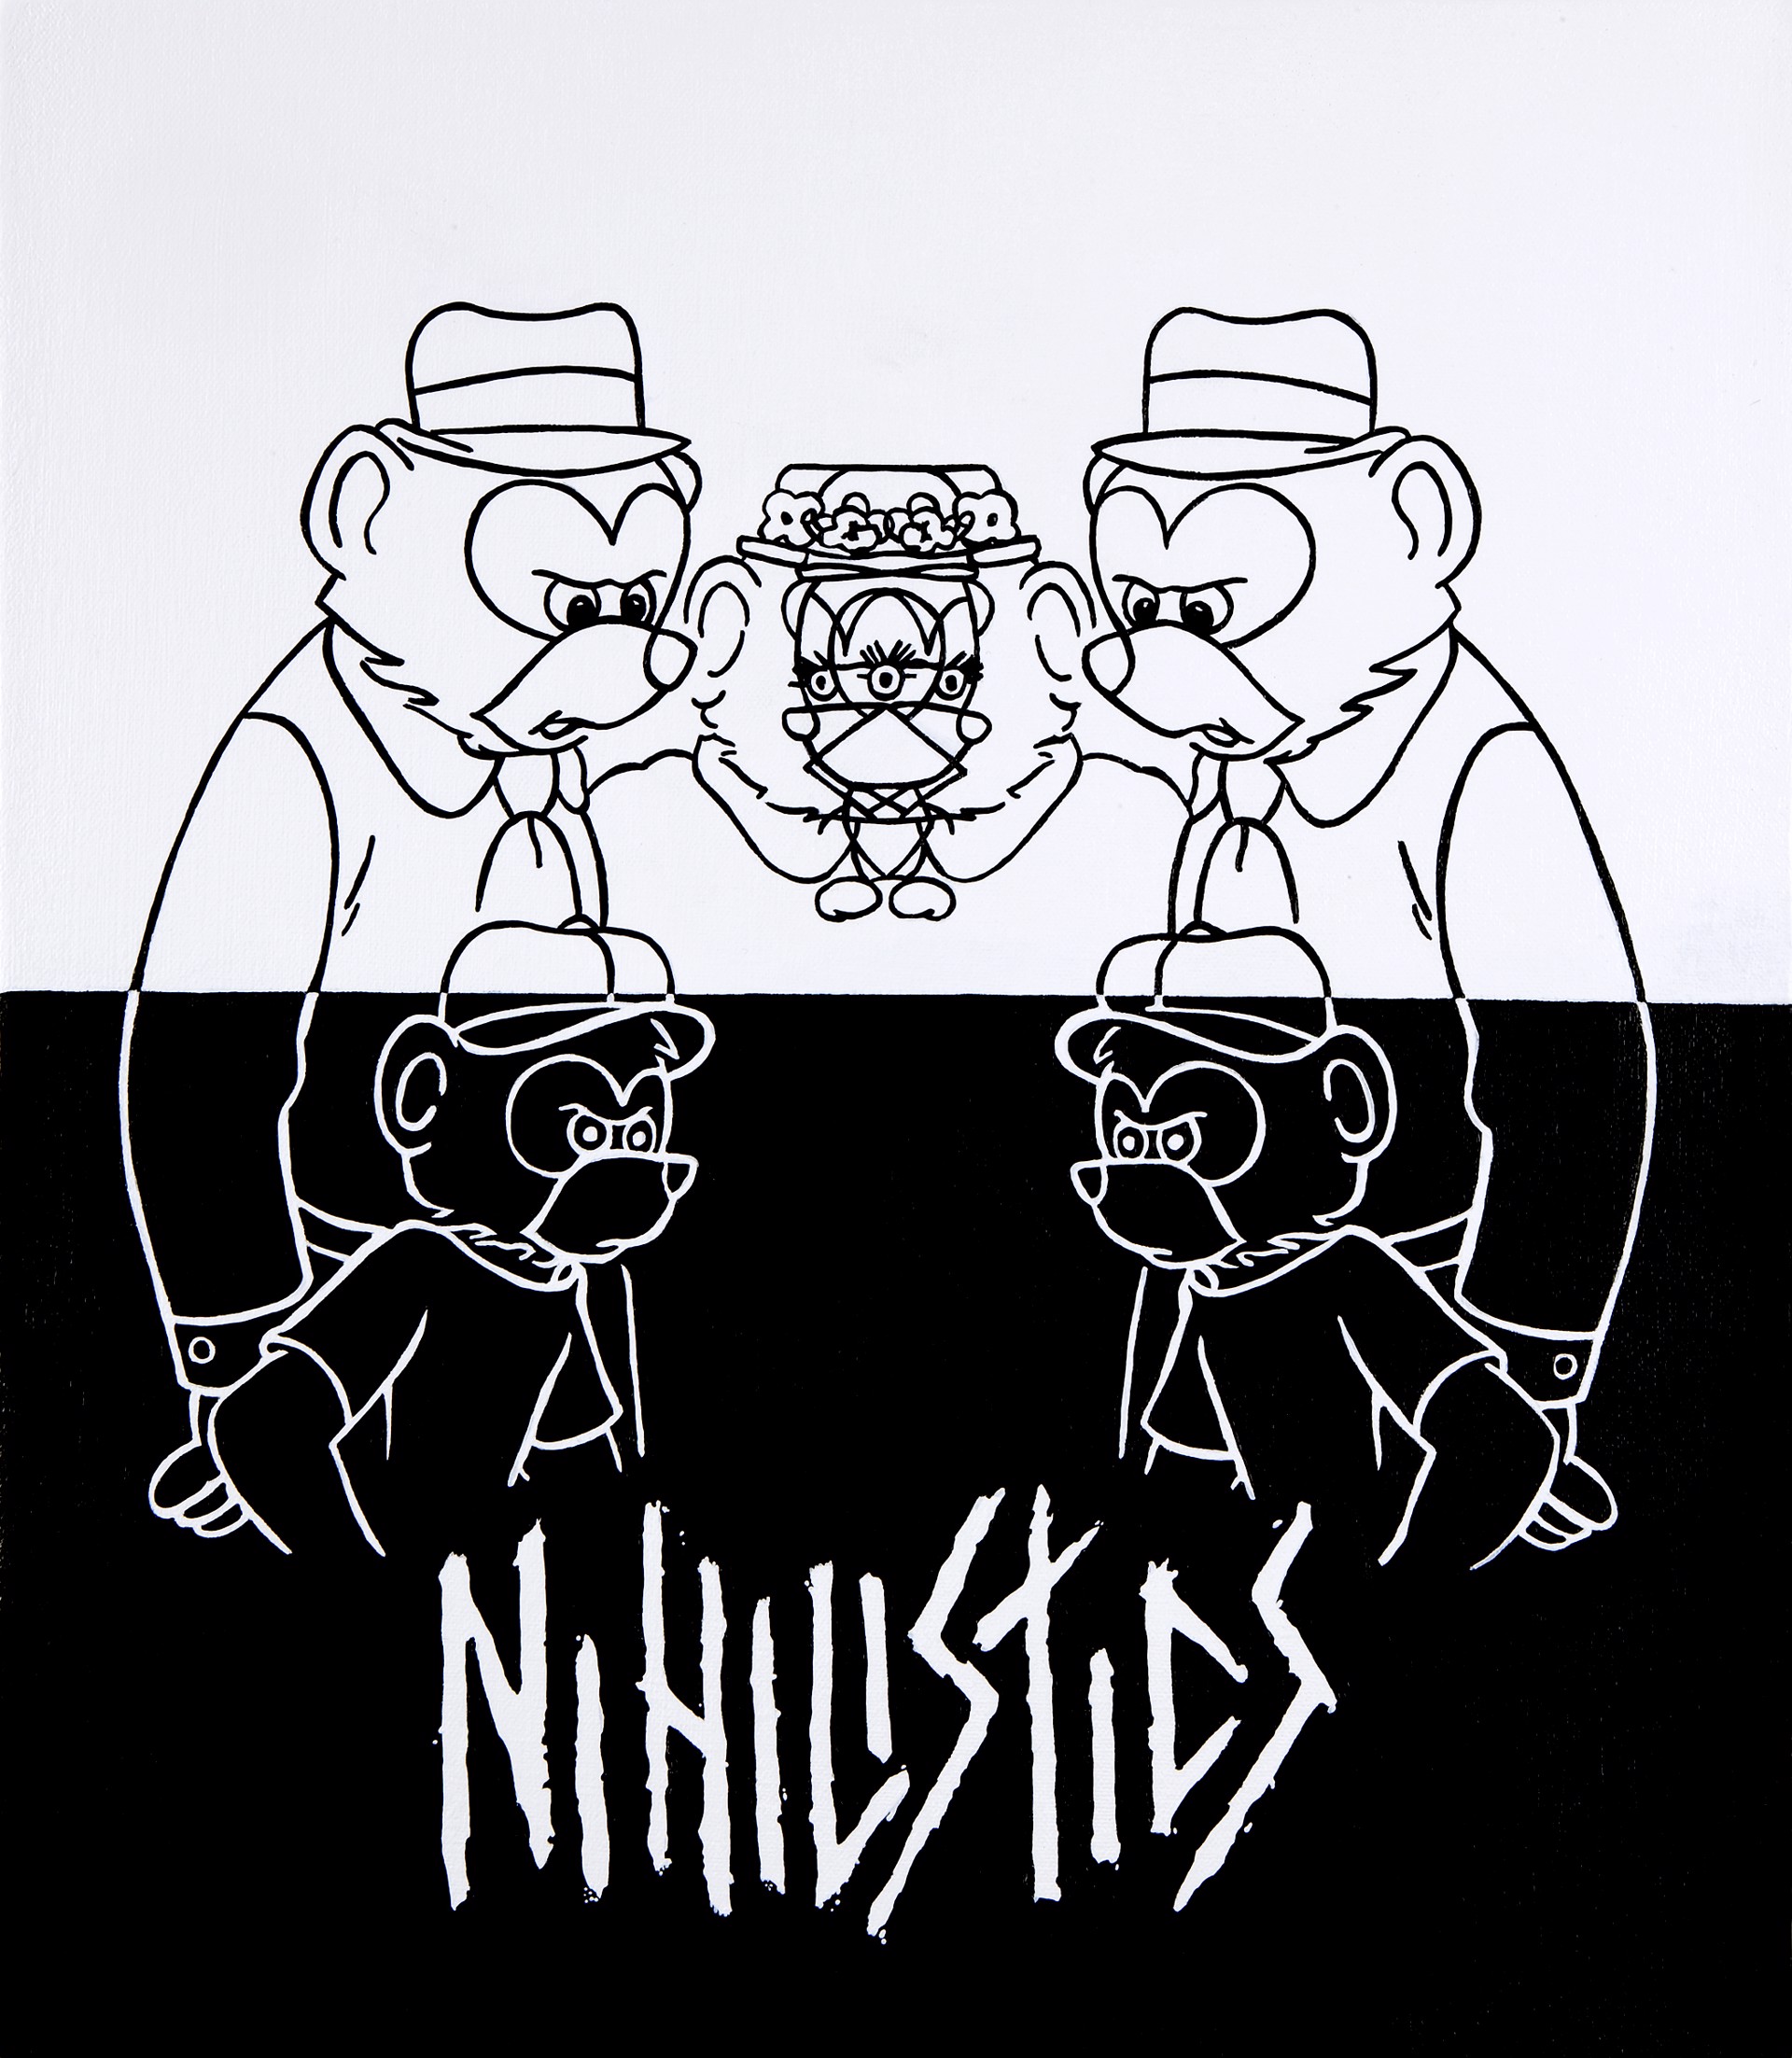 Nihilistics by Chris Bors